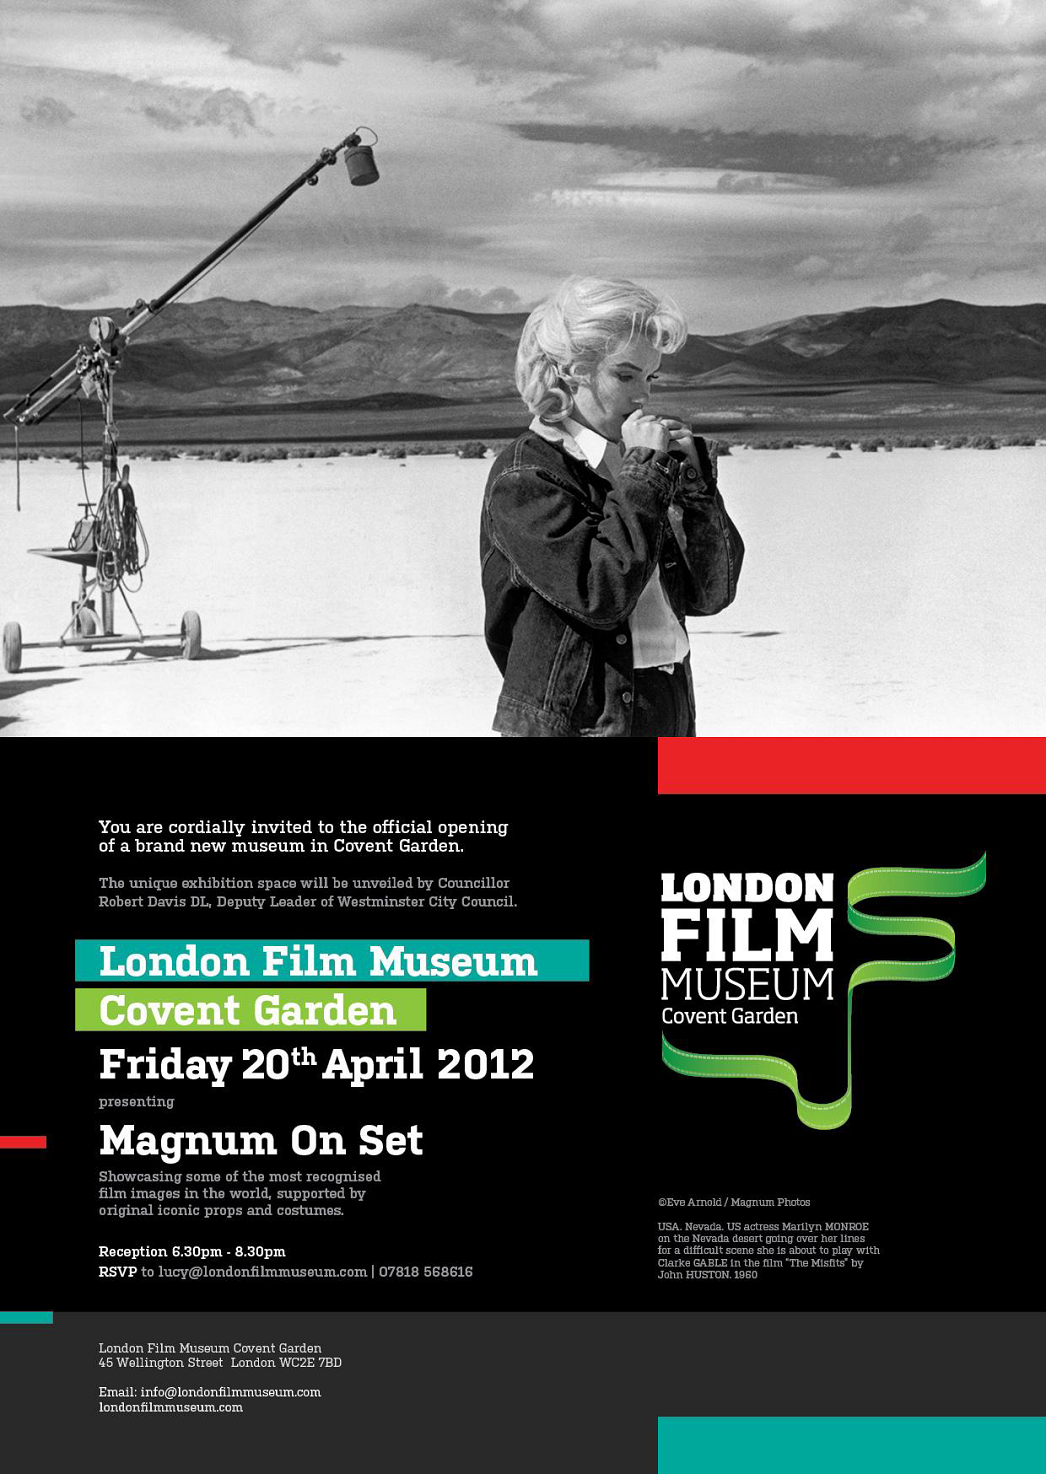 London film museum (Magnum on set)